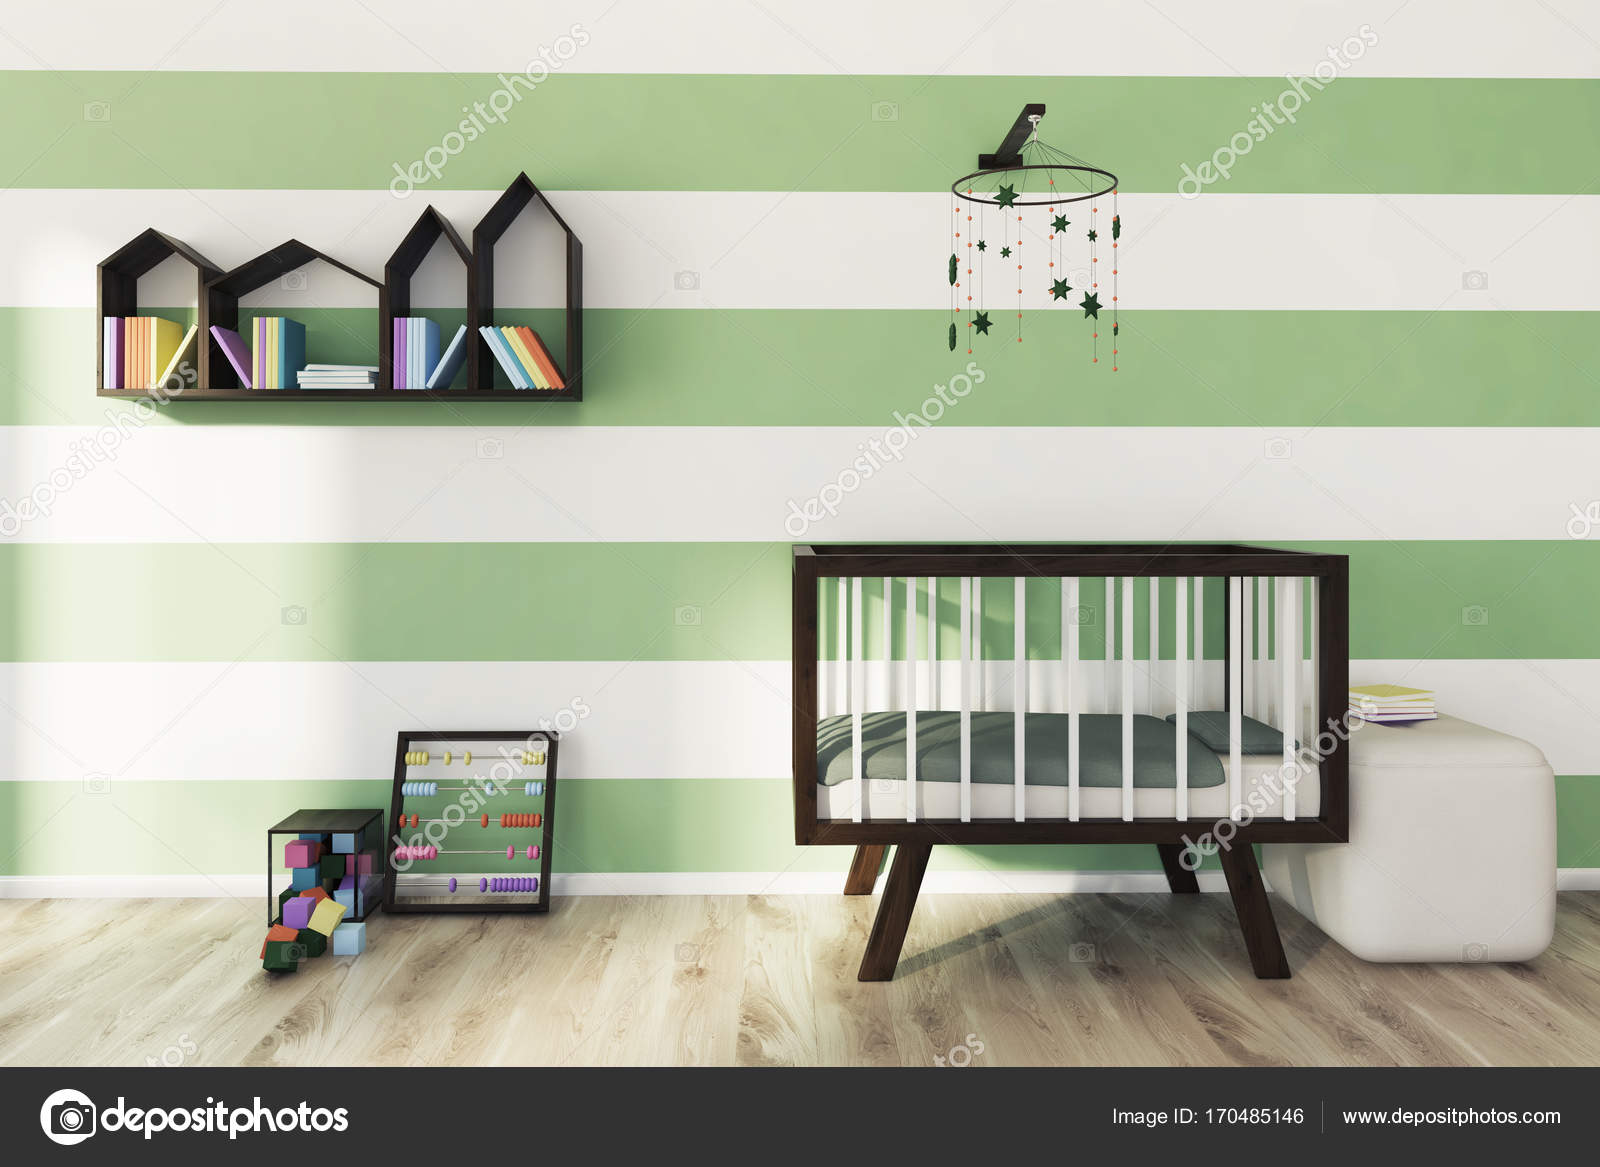 Green And White Nursery Crib Stock Photo C Denisismagilov